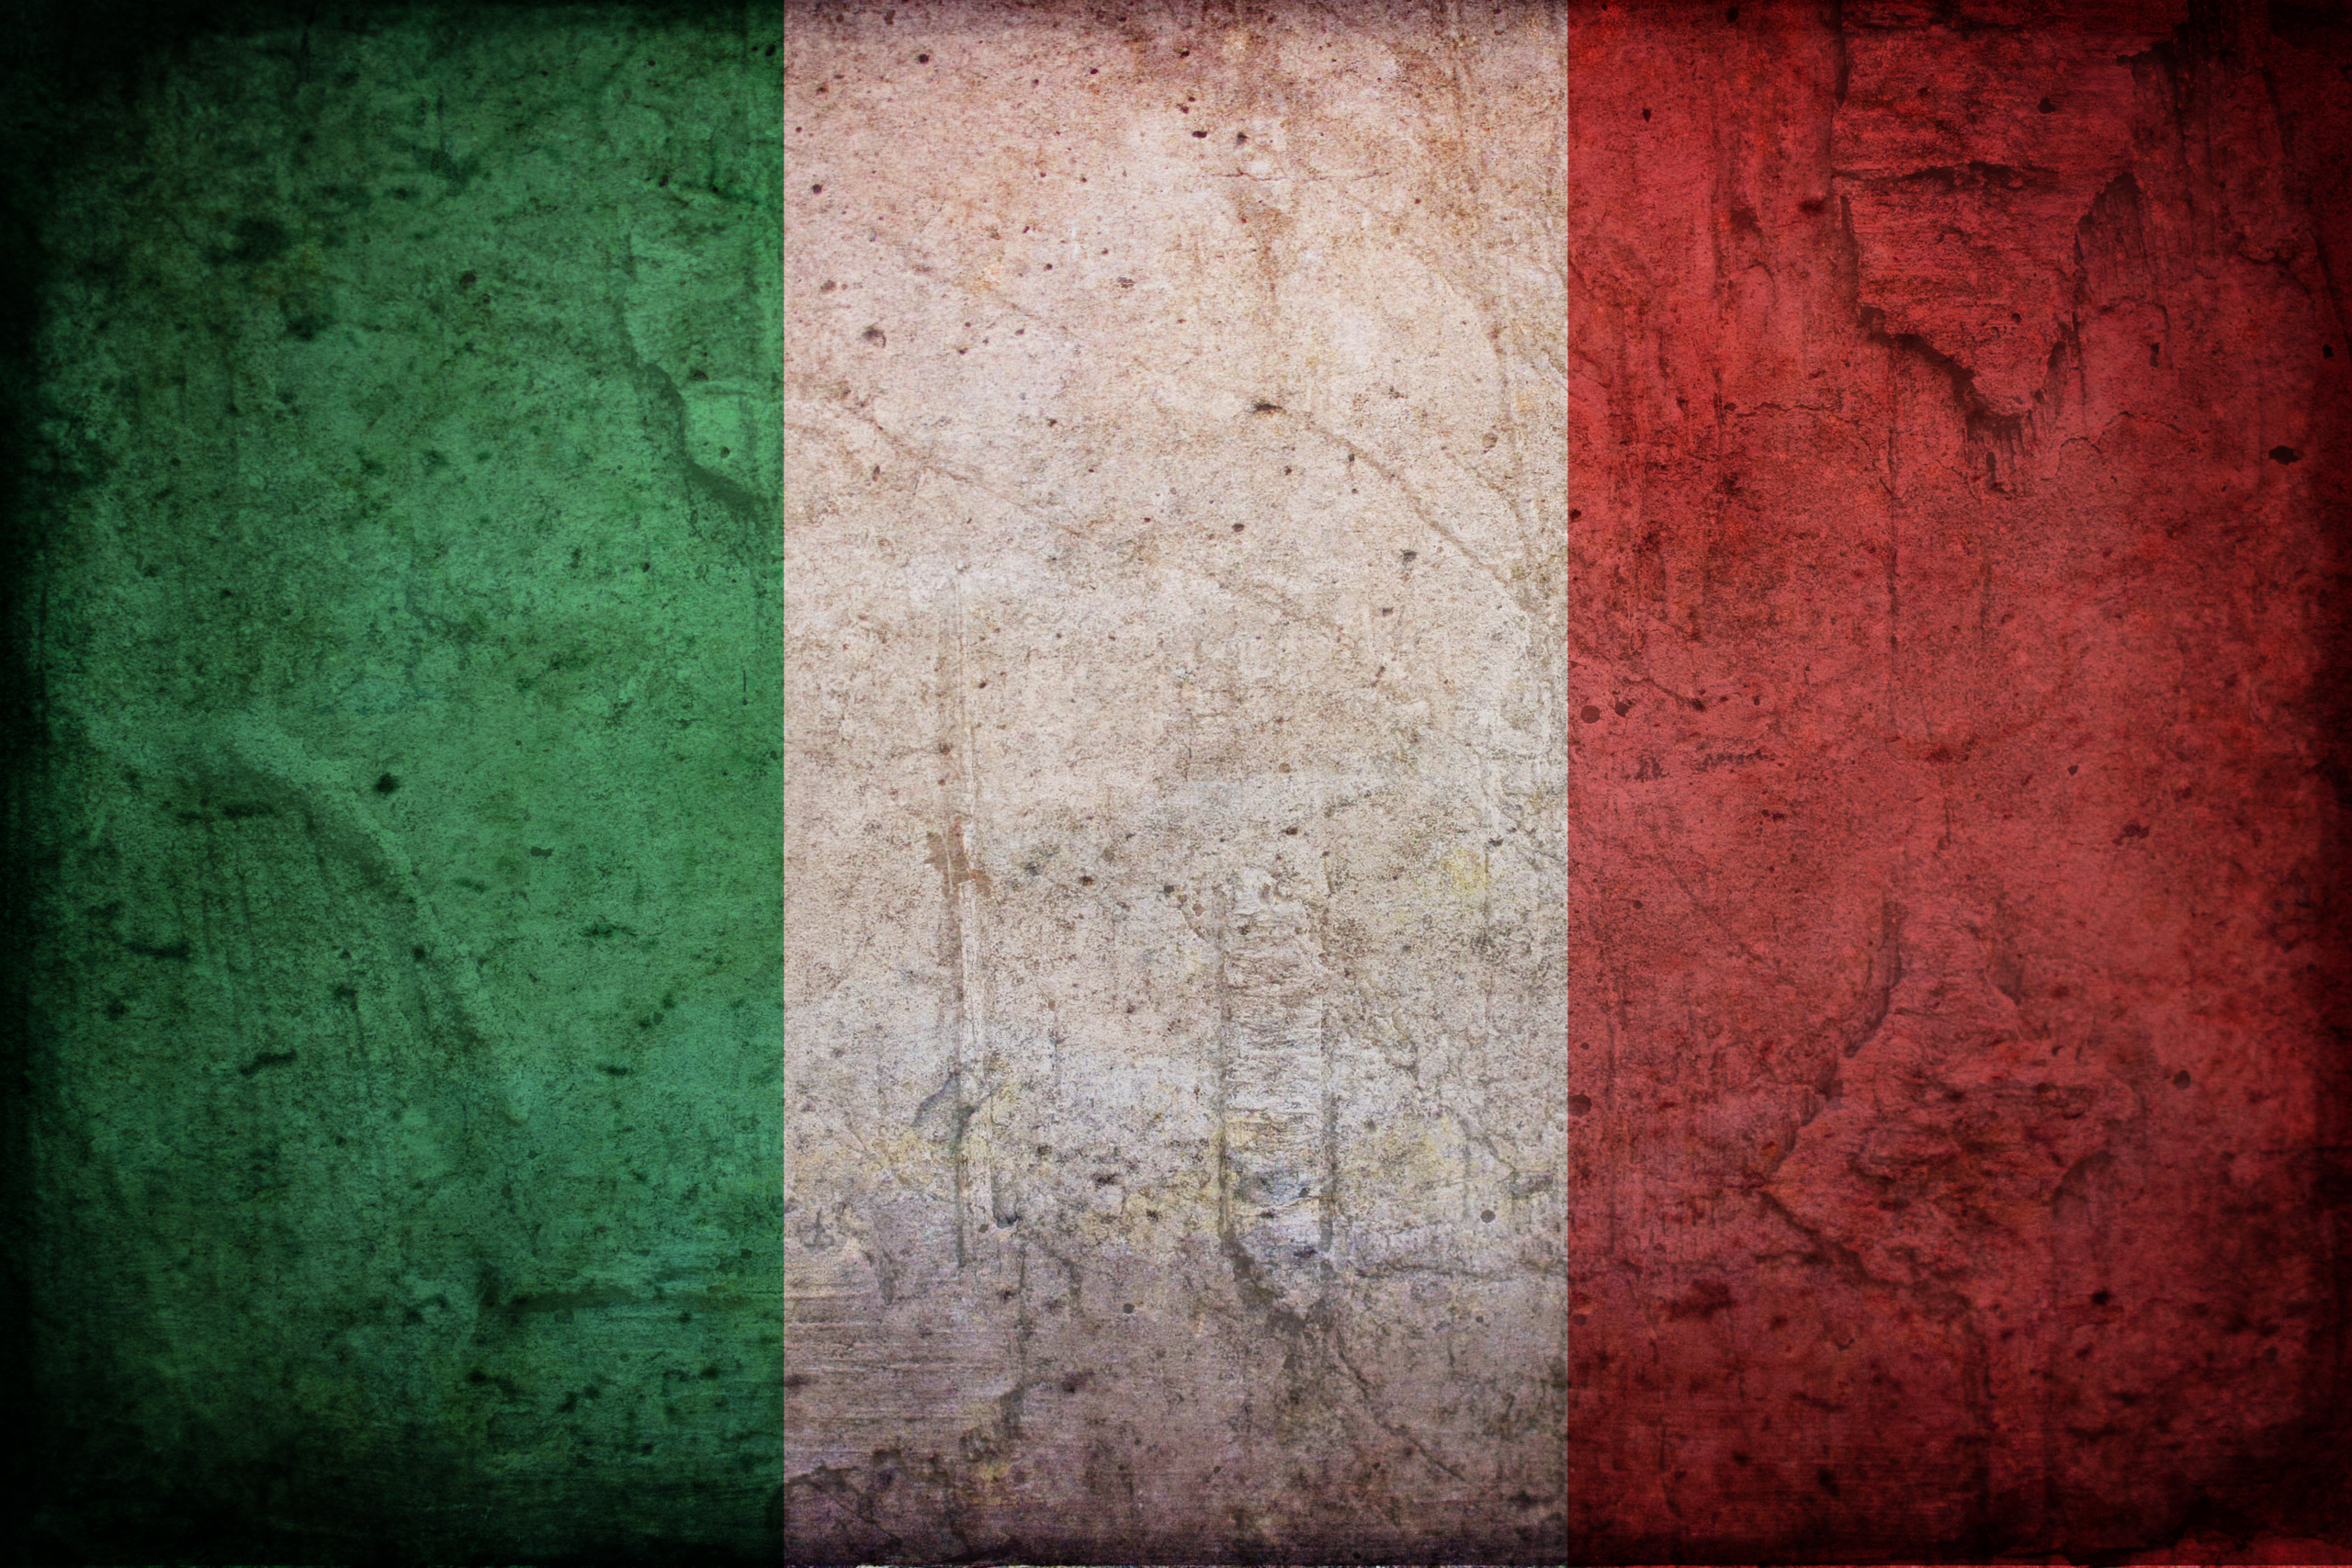 флаги, Италия - обои на рабочий стол